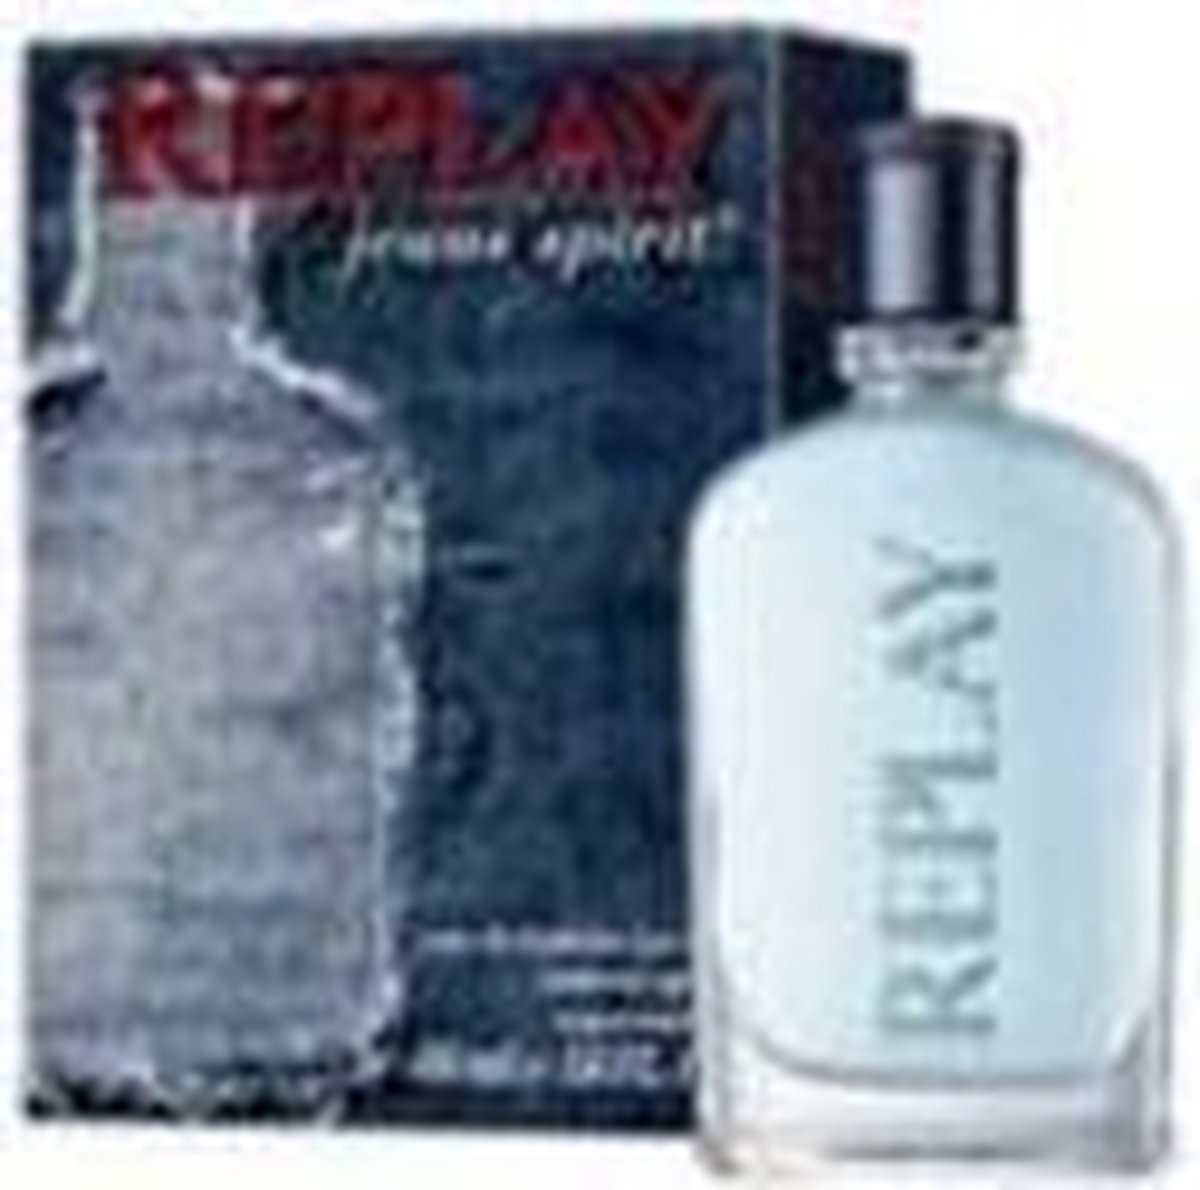 Replay Jeans Spirit! for men - Eau de toilette - 75 ml - Herenparfum |  bol.com